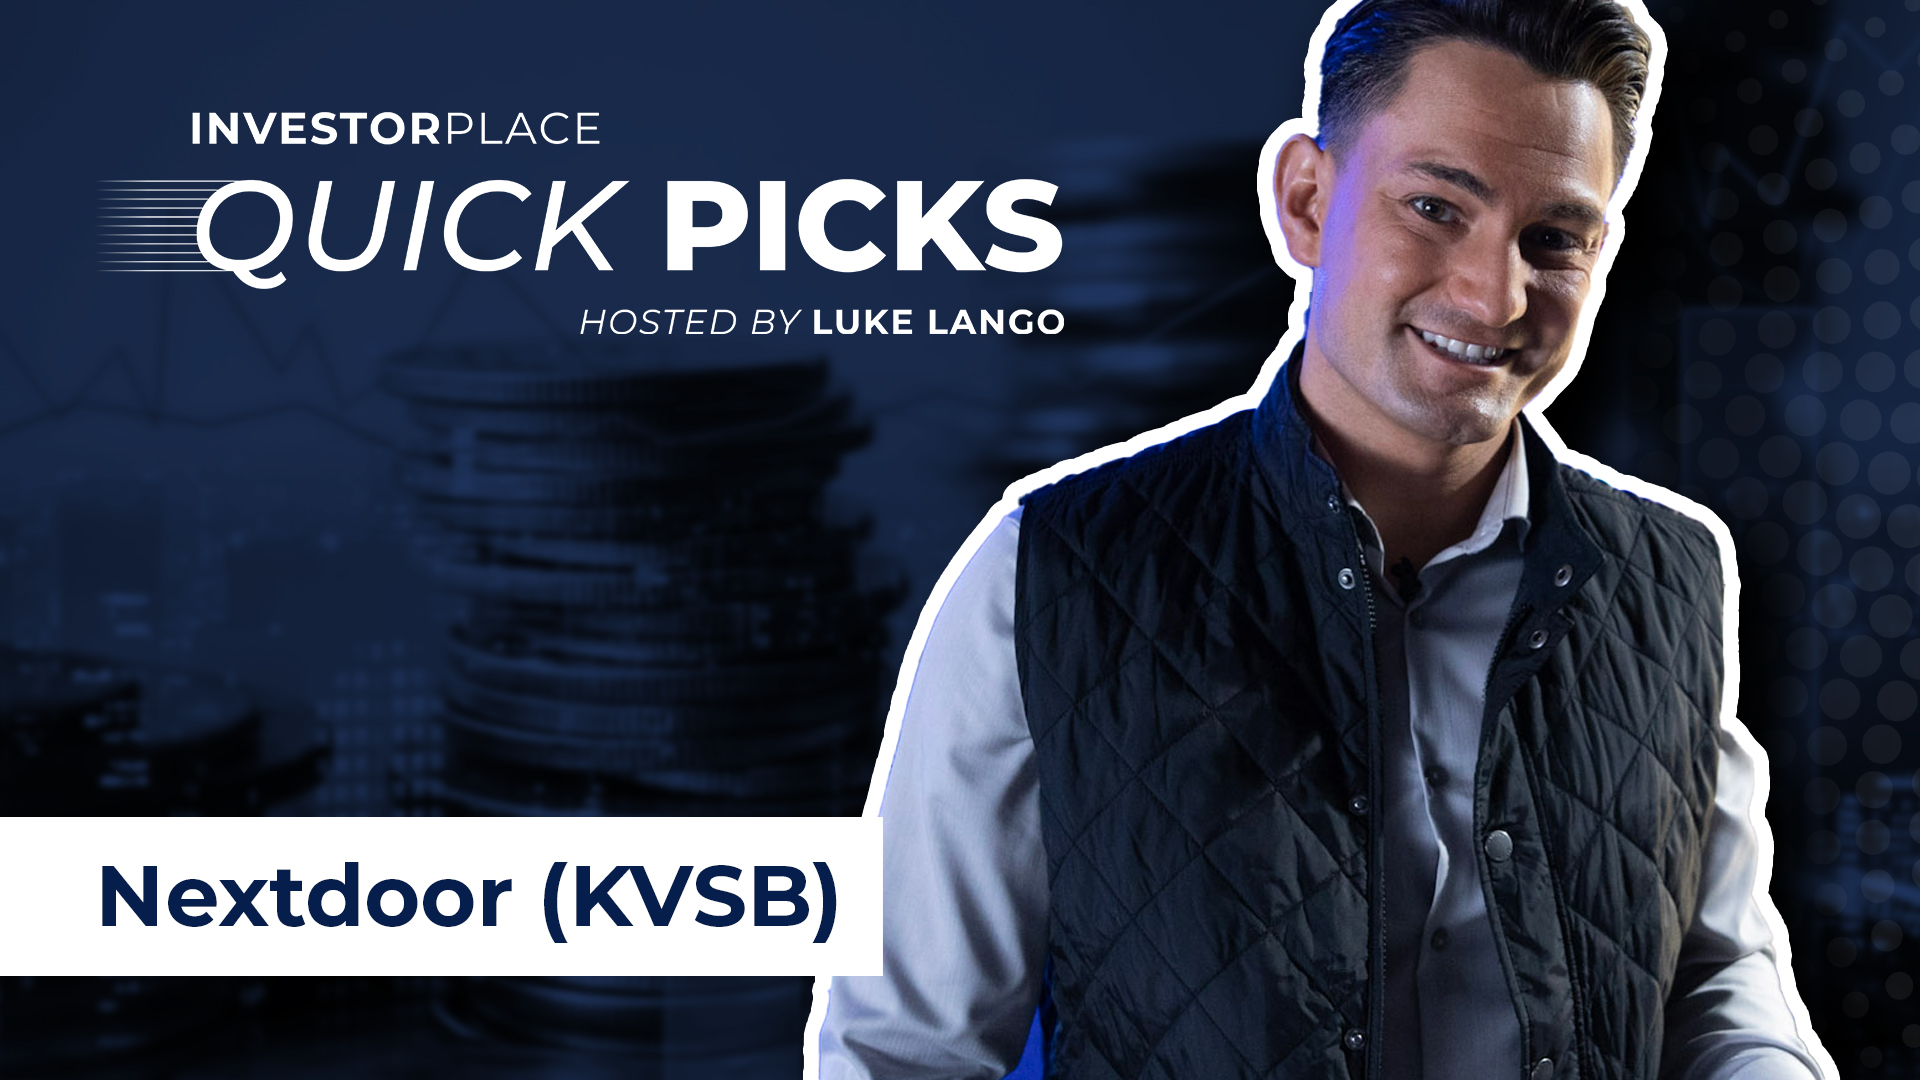 A concept image of Luke Lango's pick KVSB.